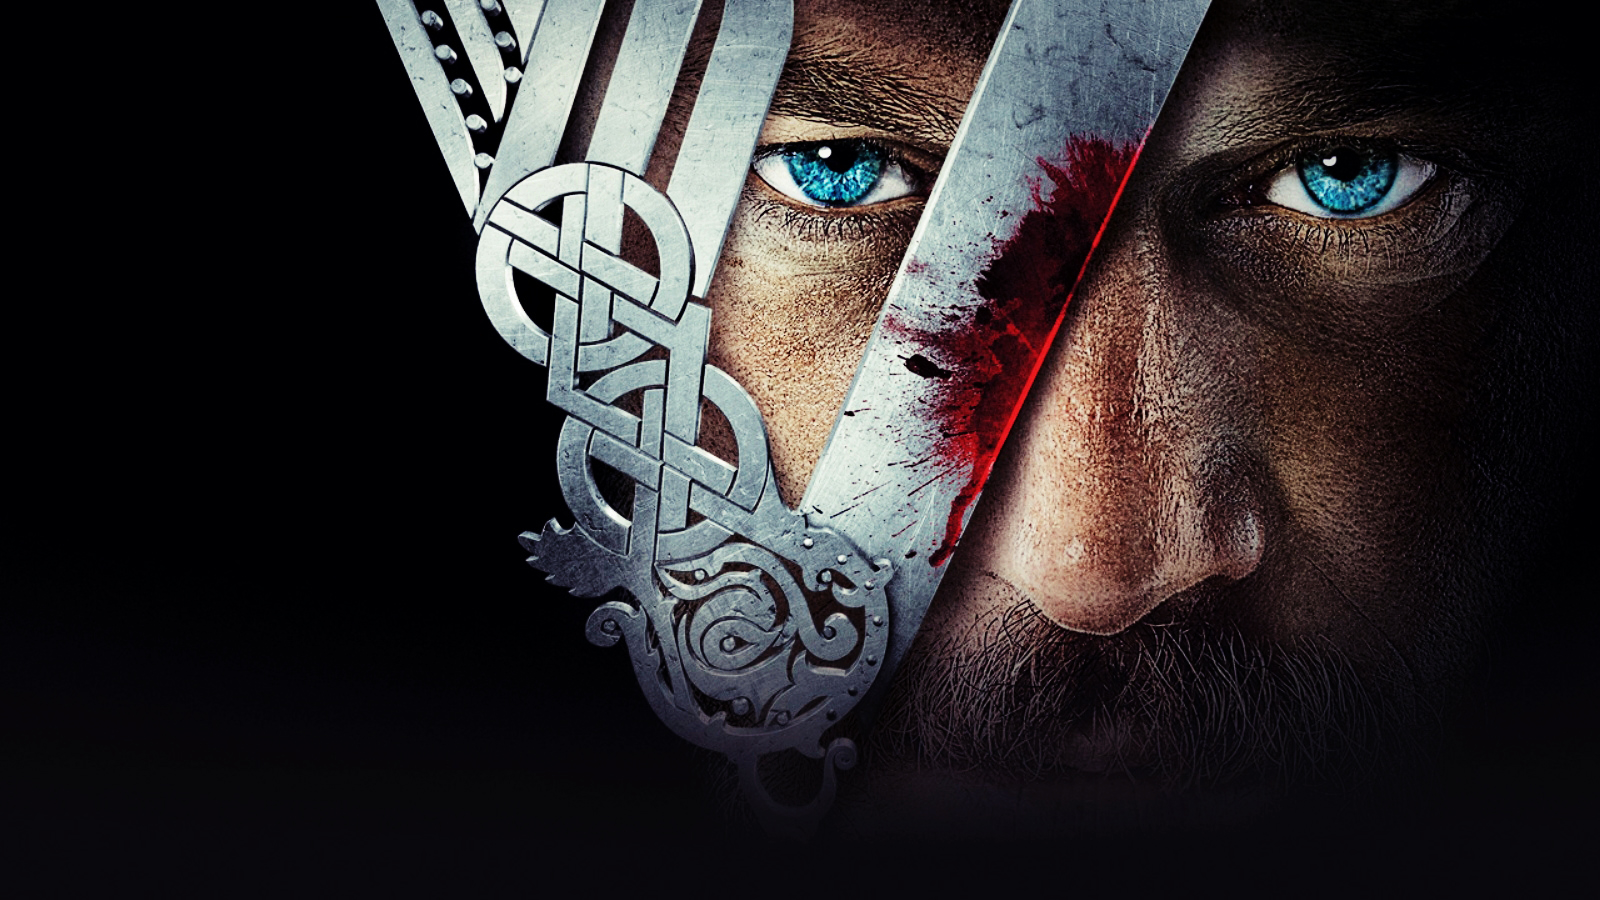 Vikings Tv Series Characters Poster HD Wallpapers Download Free